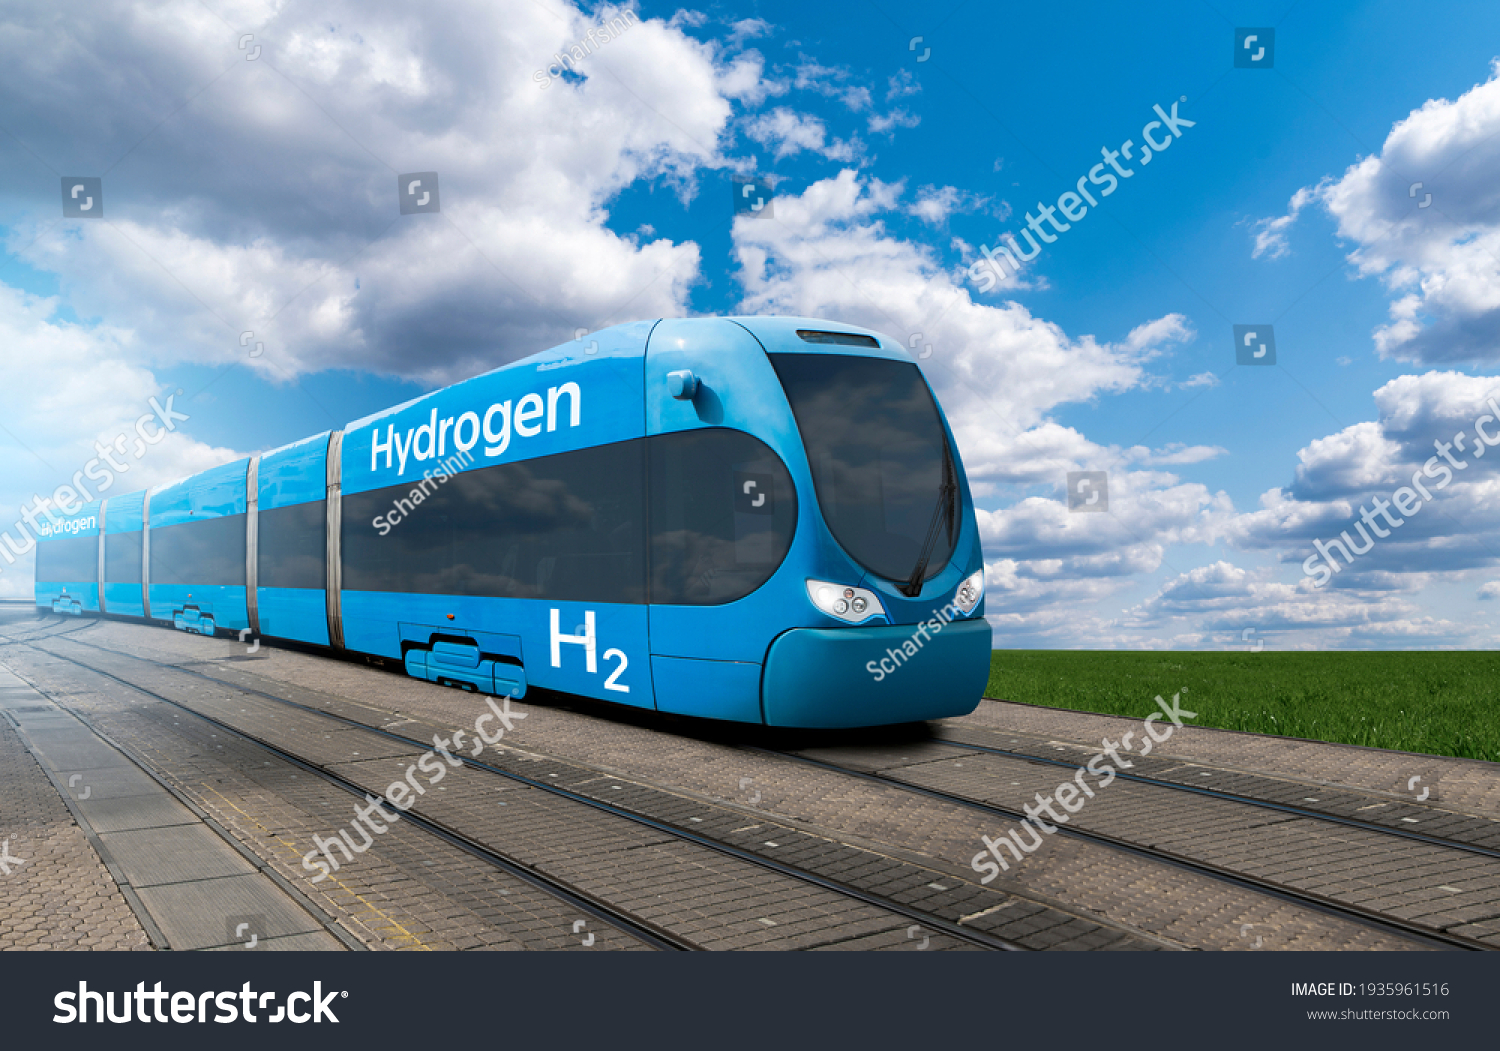 A hydrogen fuel cell train concept #1935961516